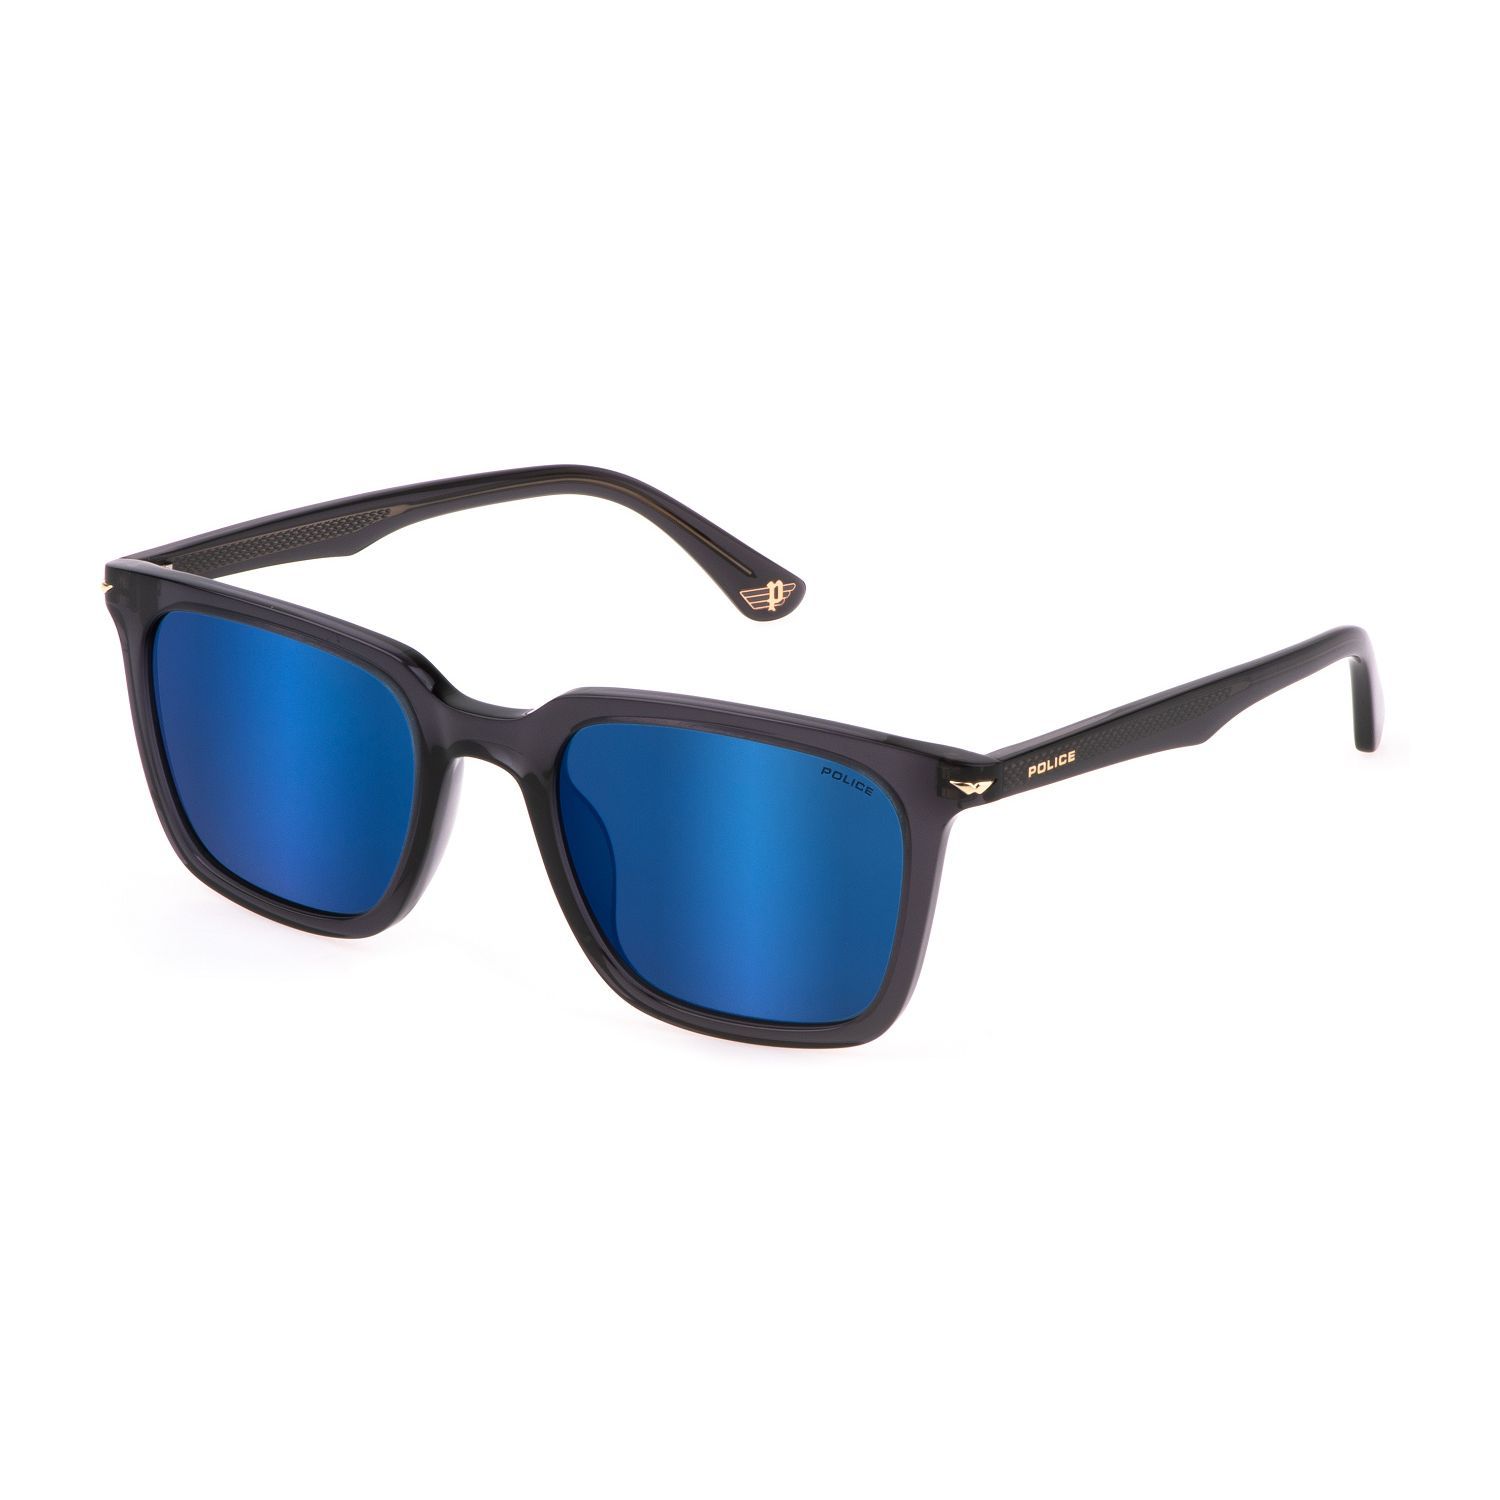 SPLL80M Square Sunglasses 705B - size 52